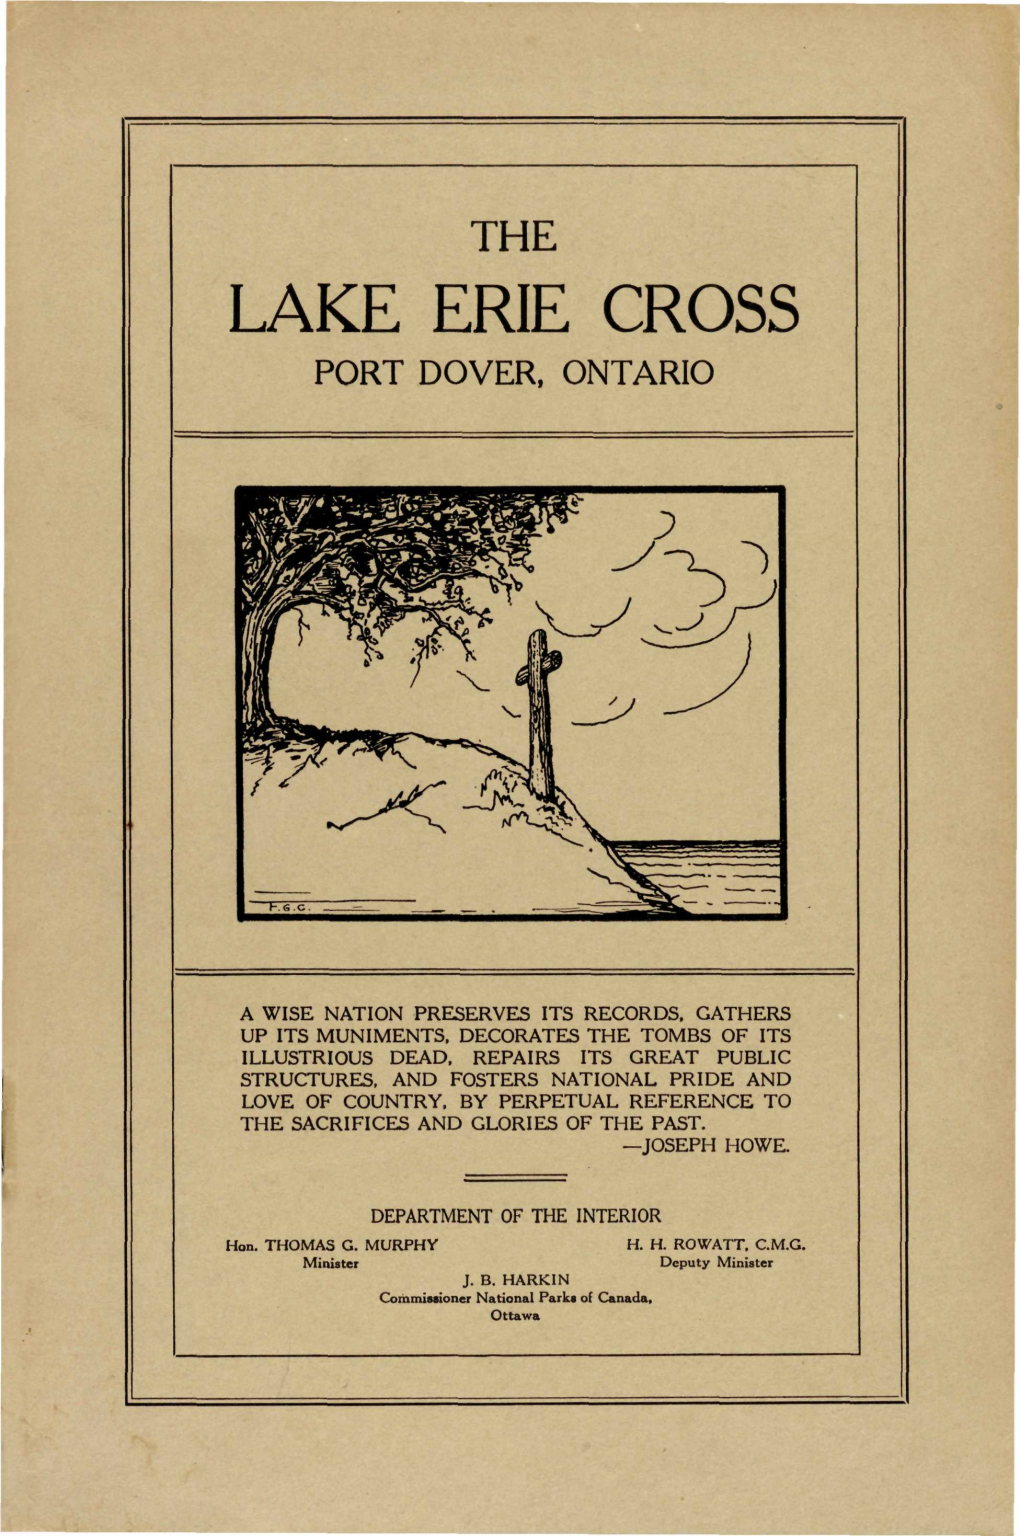 The Lake Erie Cross, Port Dover, Ontario